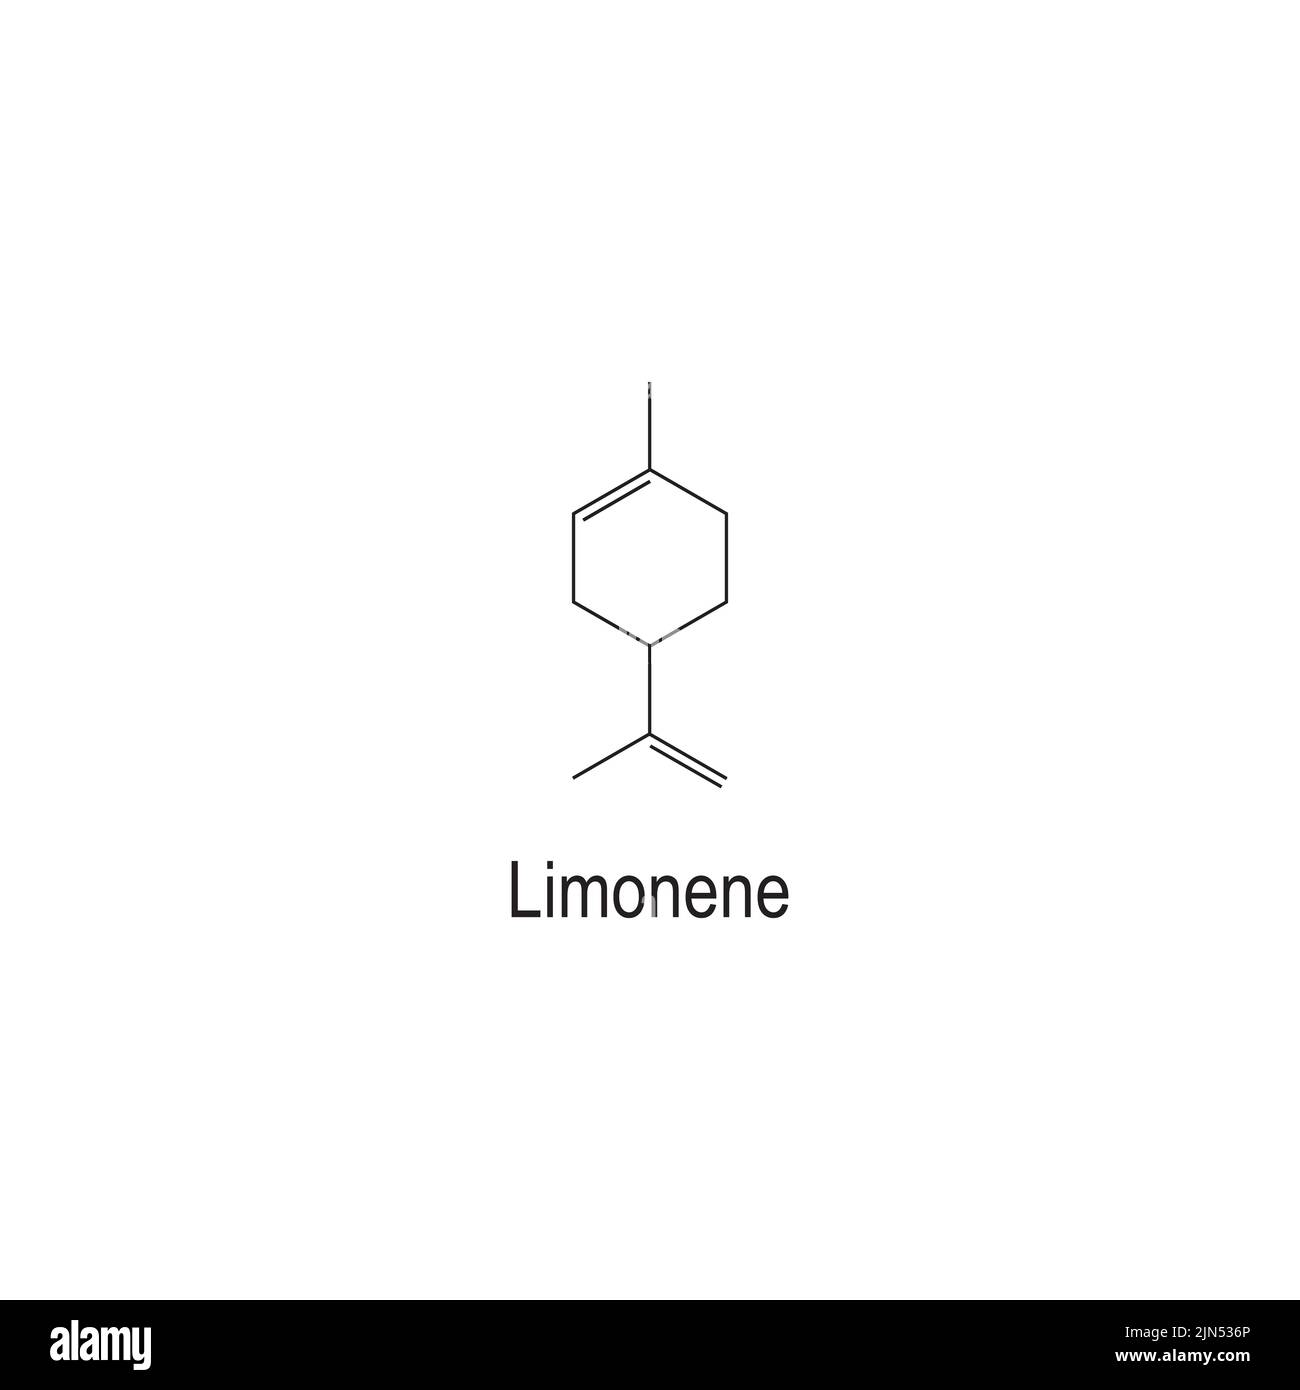 Limonene (alkene) chemical structure on white background - component of orange and lemon oils. Stock Vector